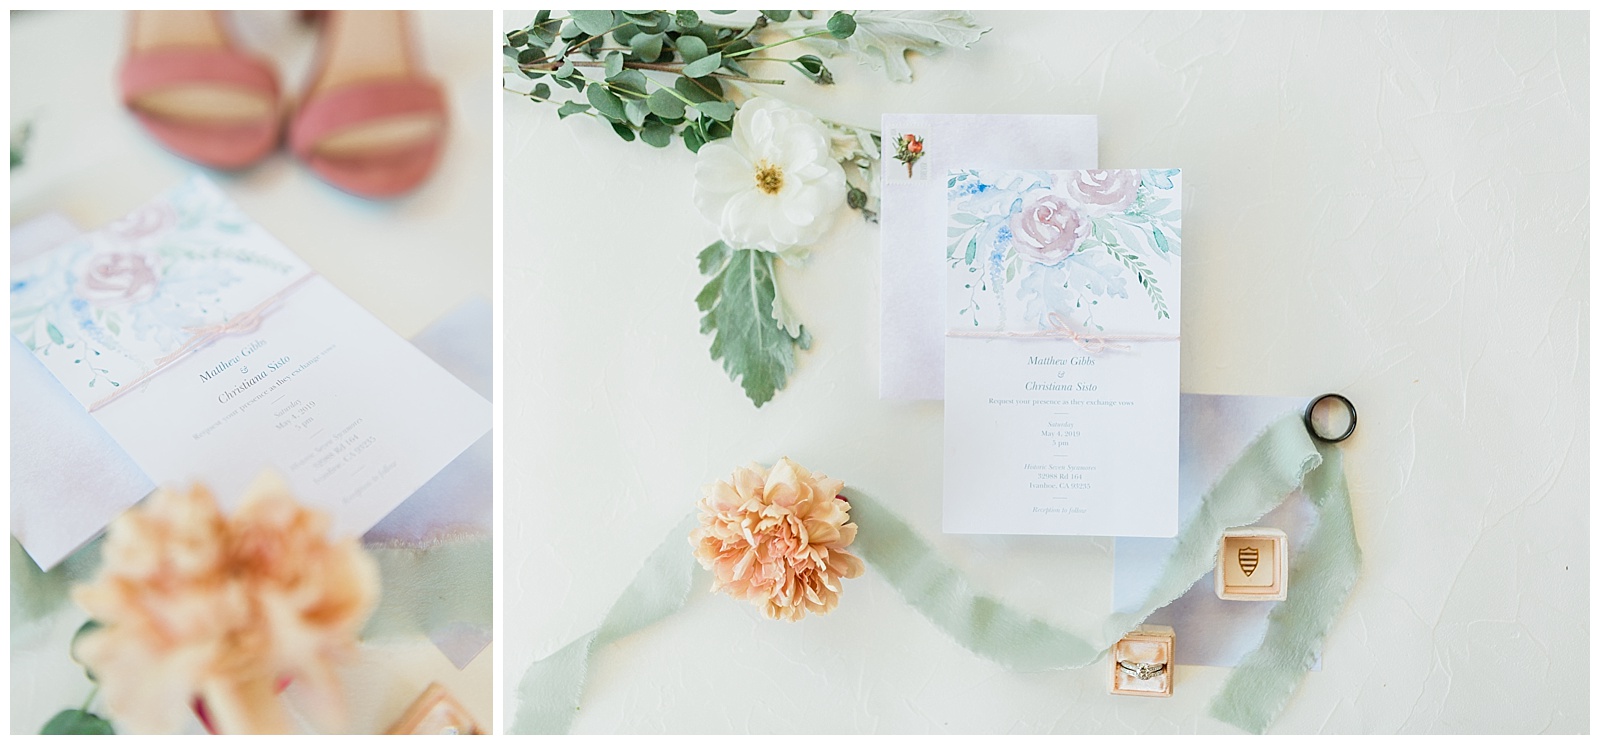 simply elegant spring wedding invitations